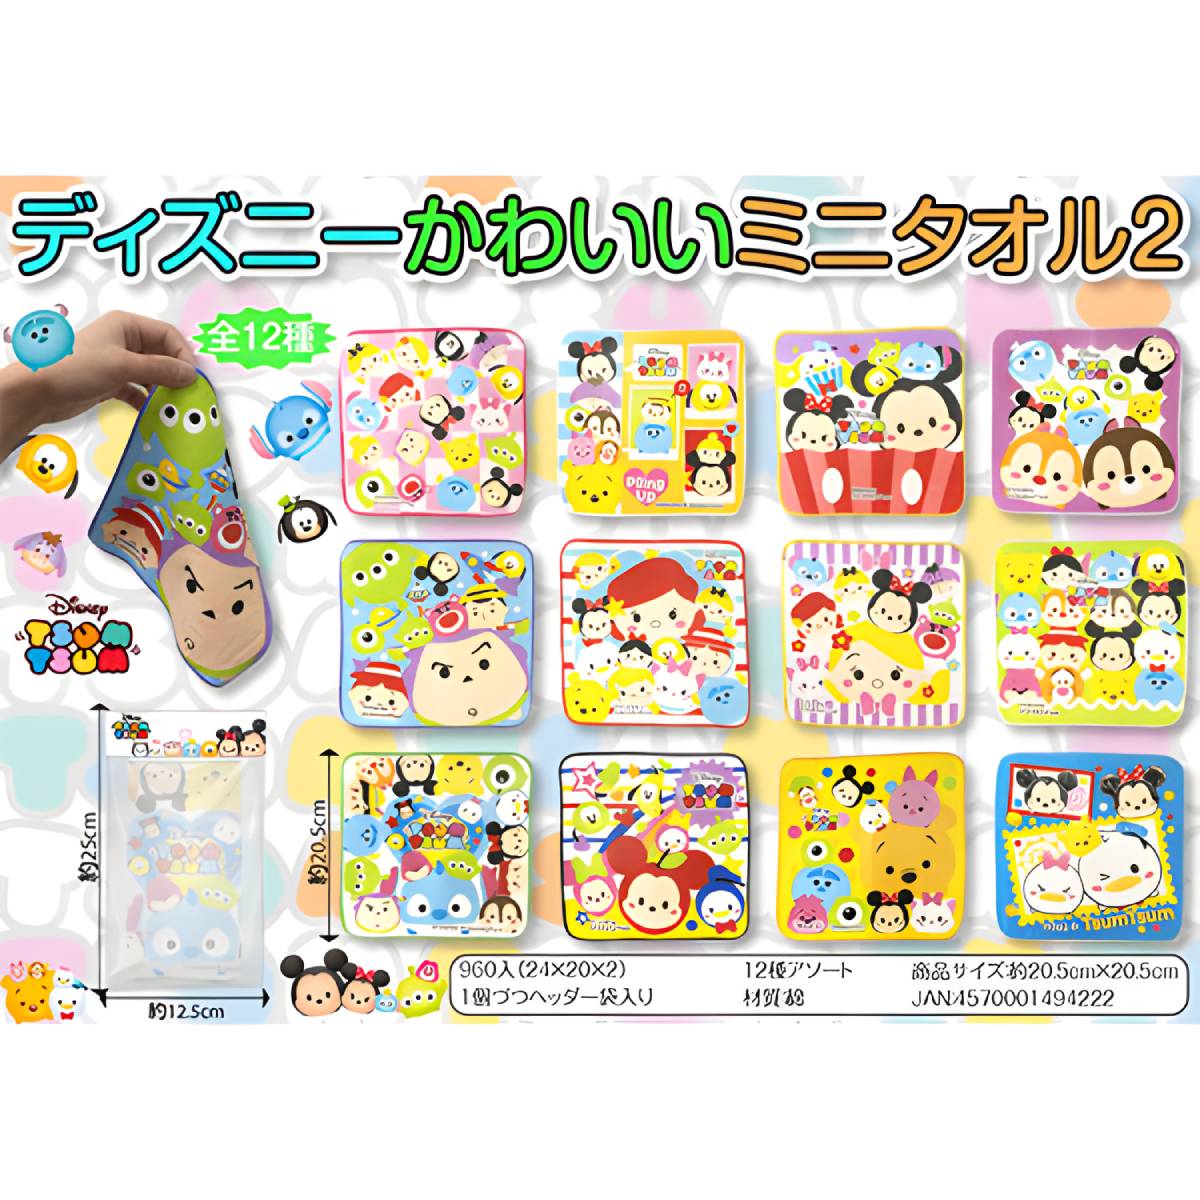 Towel Mini - Disney Tsum Tsum Square 12in1 (Japan Edition)